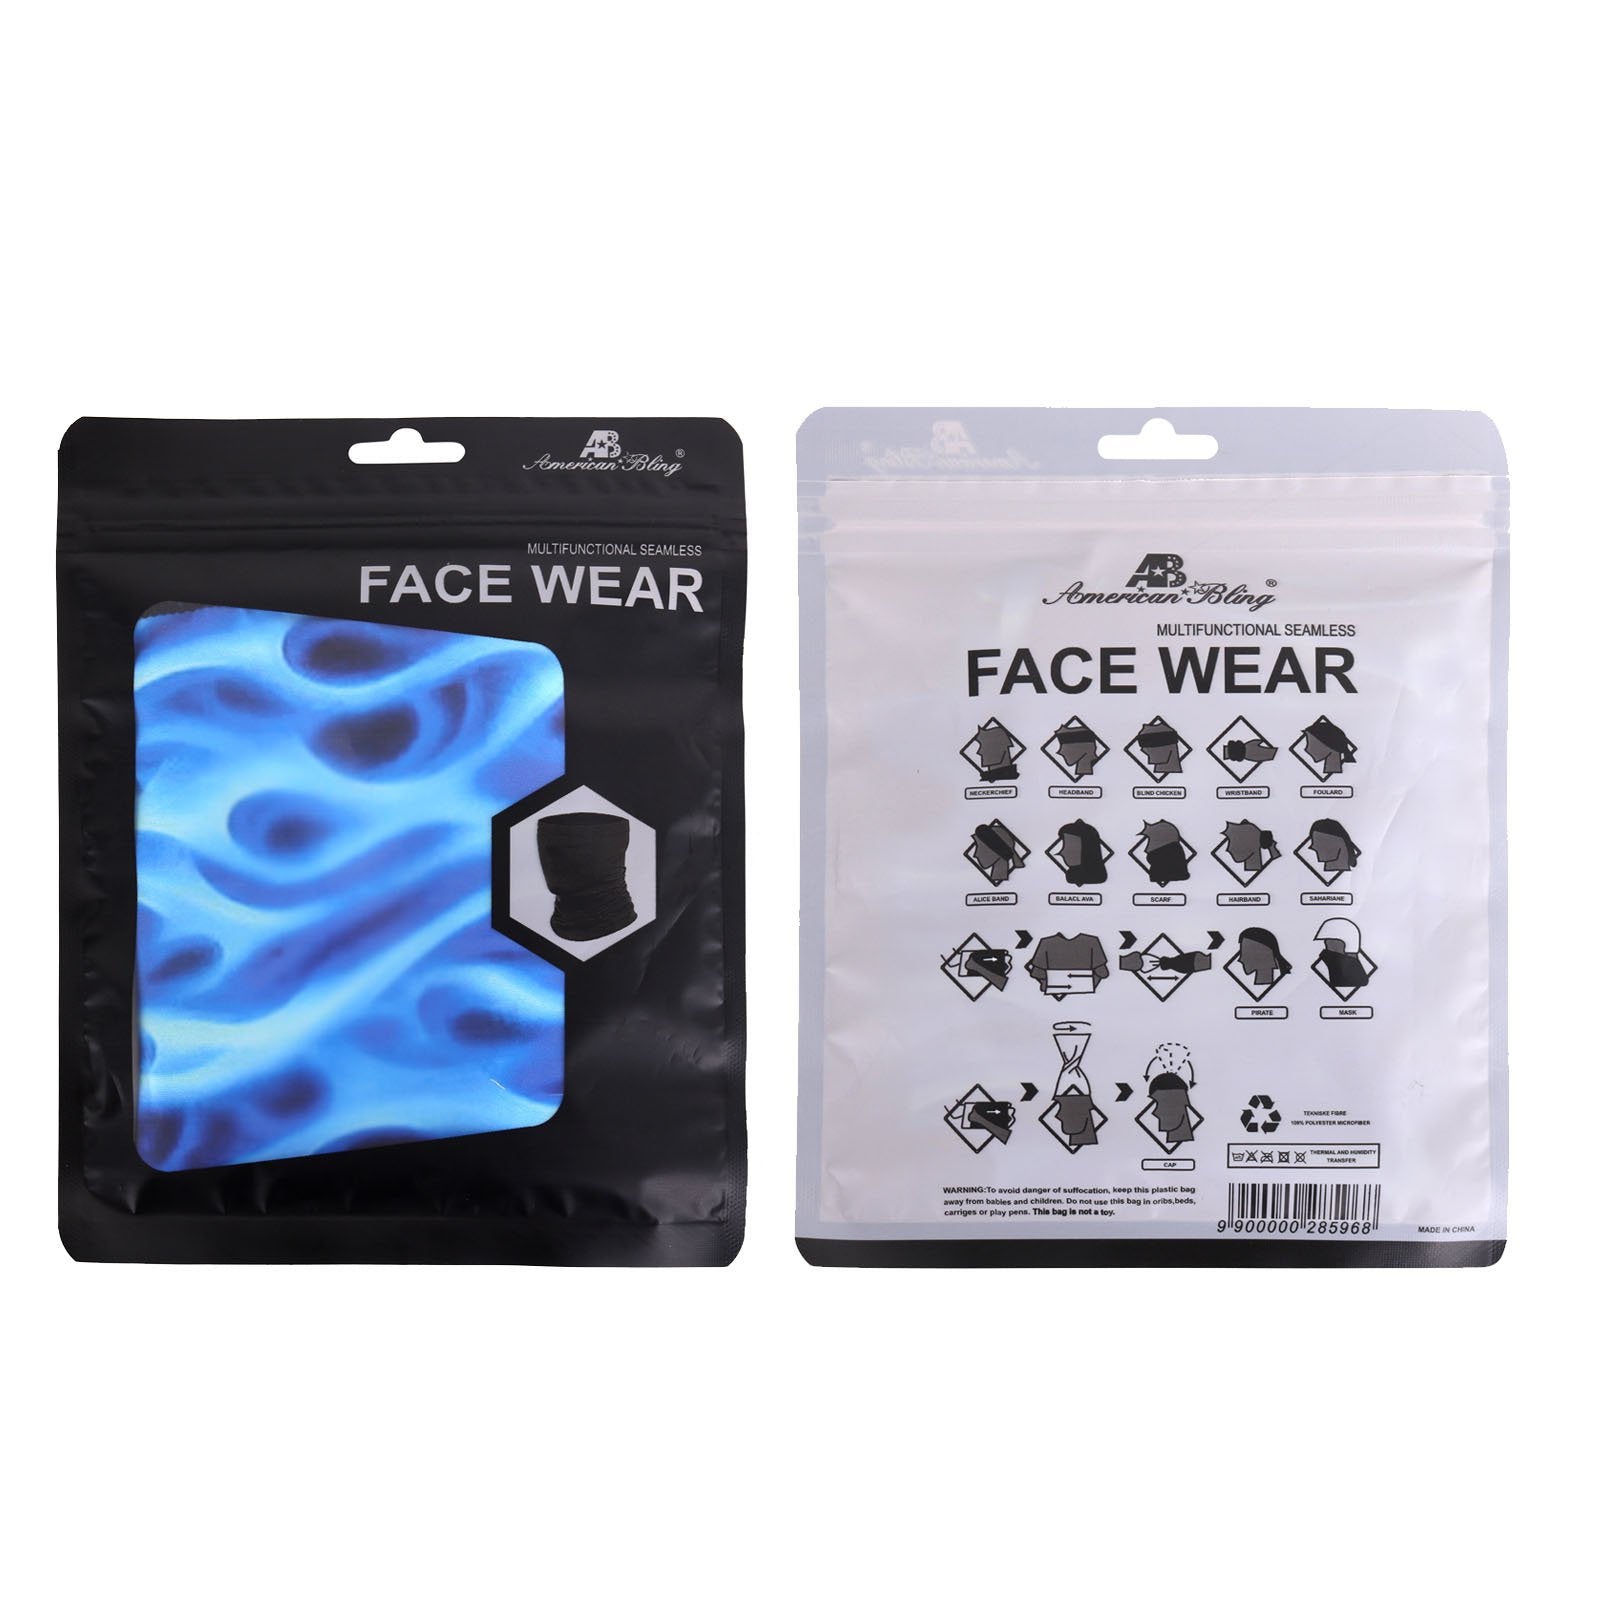 NFC-9012  White Aztec Sugar Skull Print Neck Gaiter Face Mask Reusable, Washable Bandana /Head Wrap Scarf-1Pcs/Pack